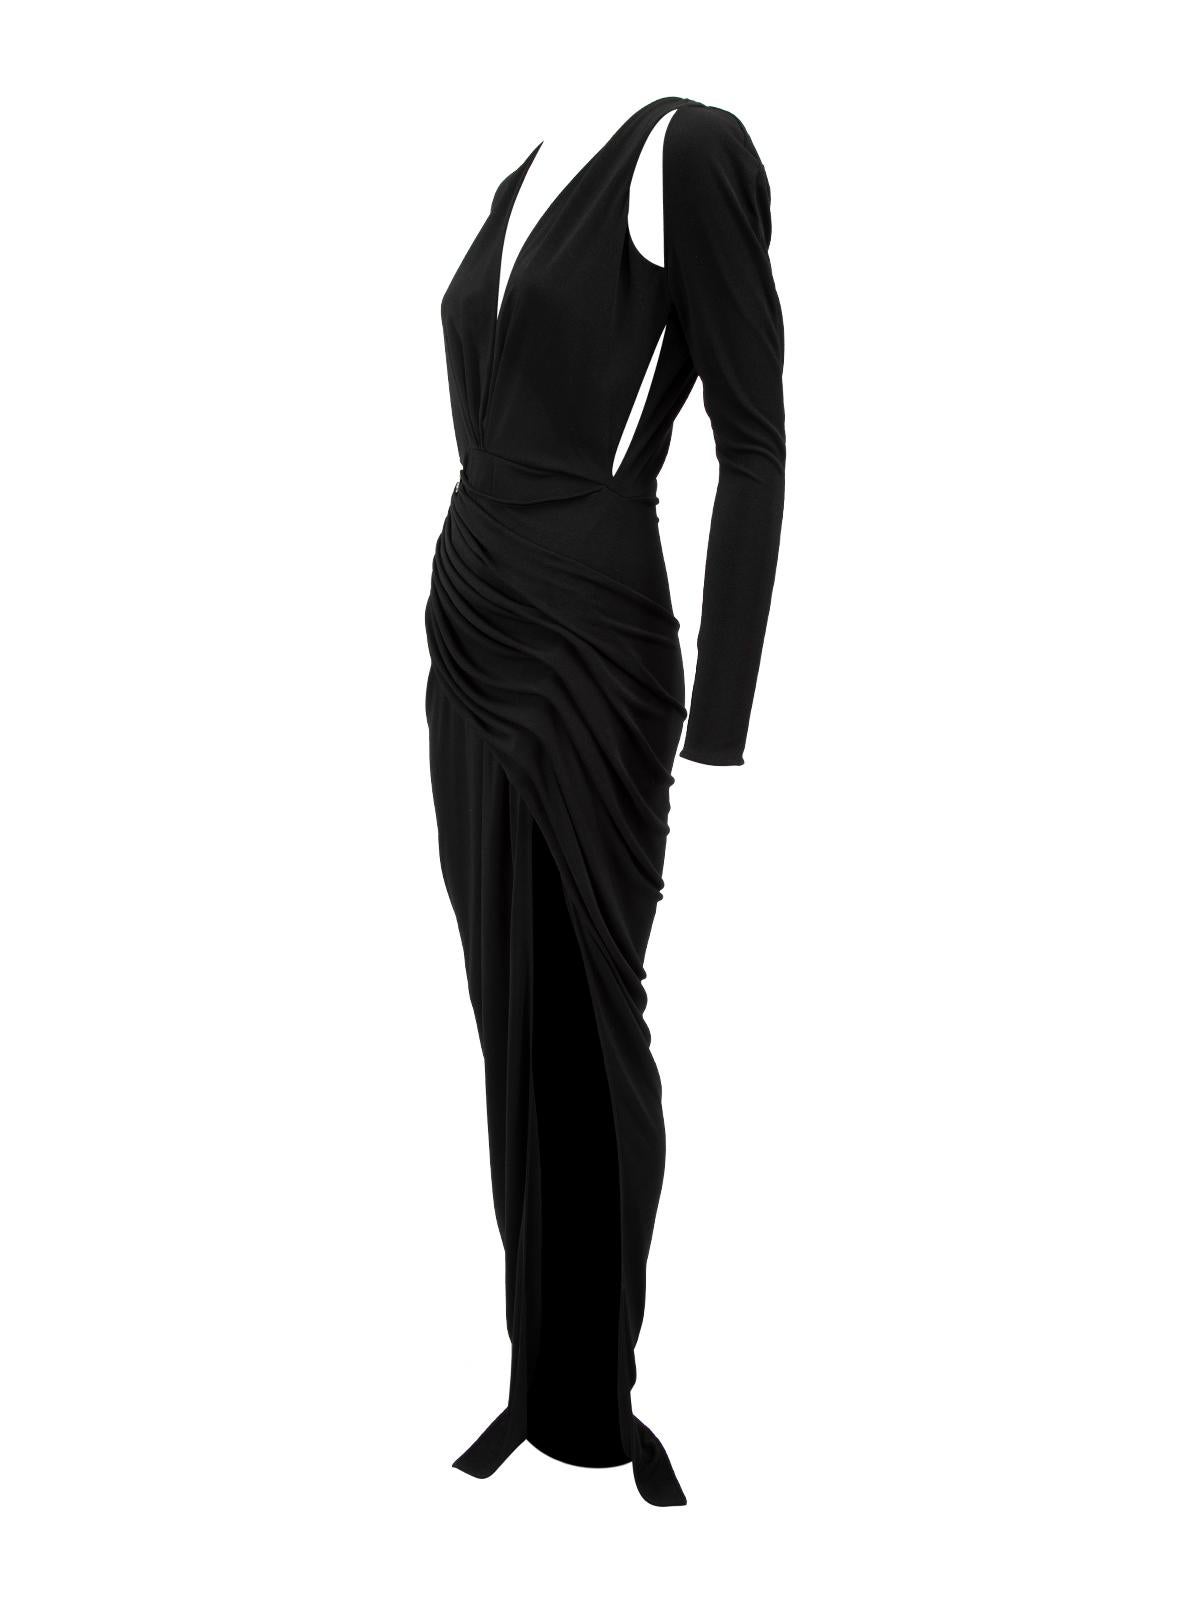 Pre-Loved Philipp Plein Women's Black Cold Shoulder Deep V Ruched Gown For Sale 1